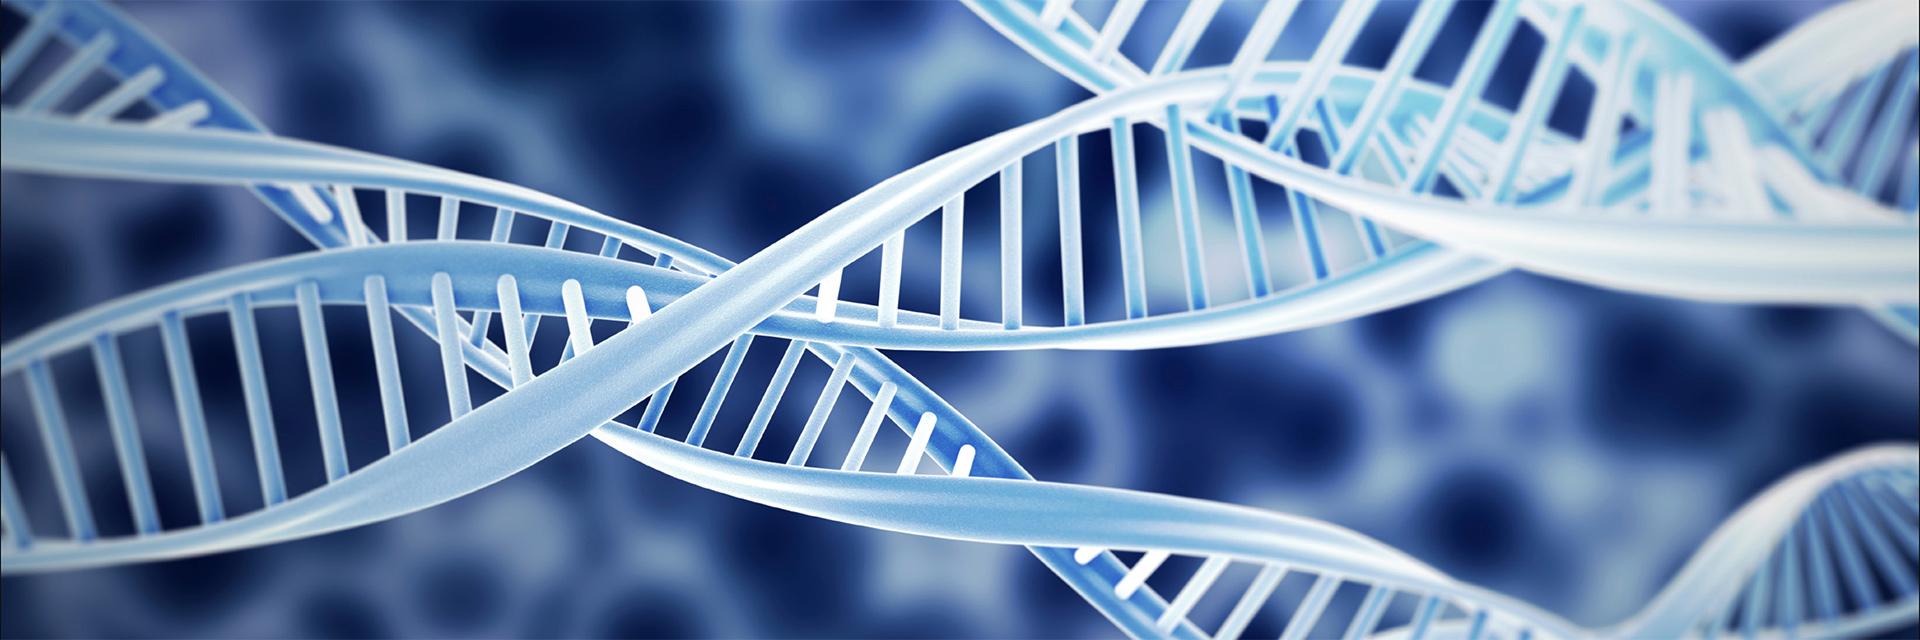 DNA graphic illustration